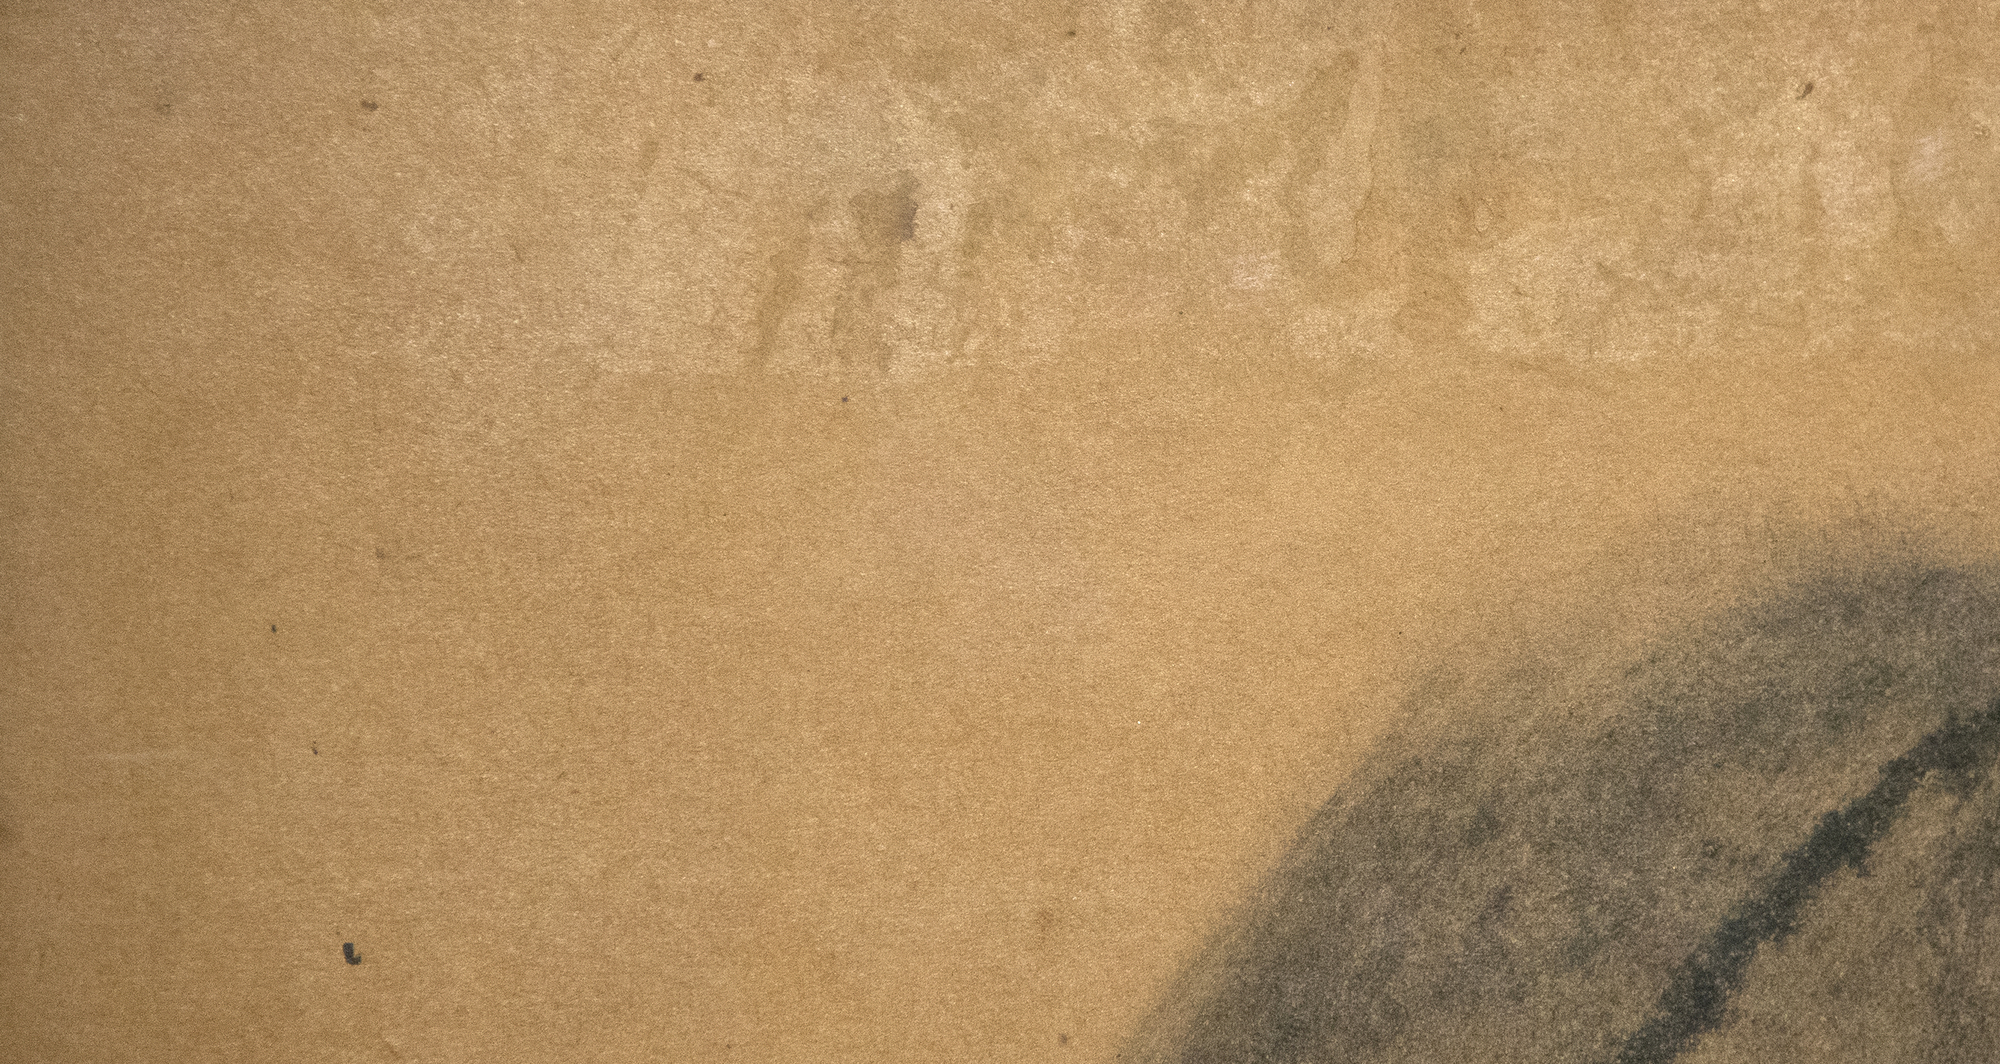 FERNANDO BOTERO - Autoretrato a la manera de Velázquez - Sanguine und Kreide auf Karton - 60 1/2 x 47 1/2 in.